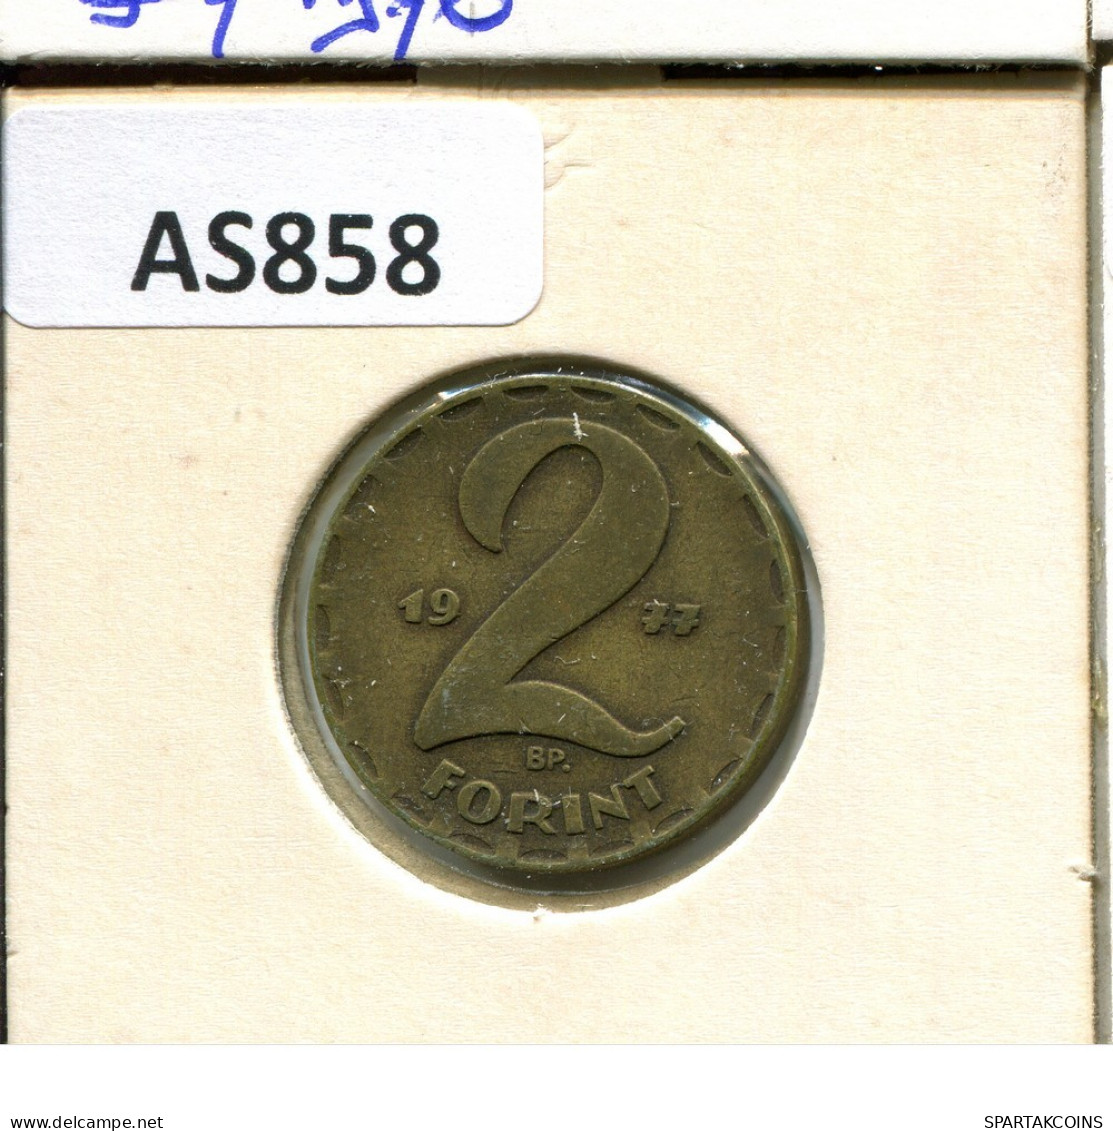 2 FORINT 1977 HUNGARY Coin #AS858.U.A - Hungary